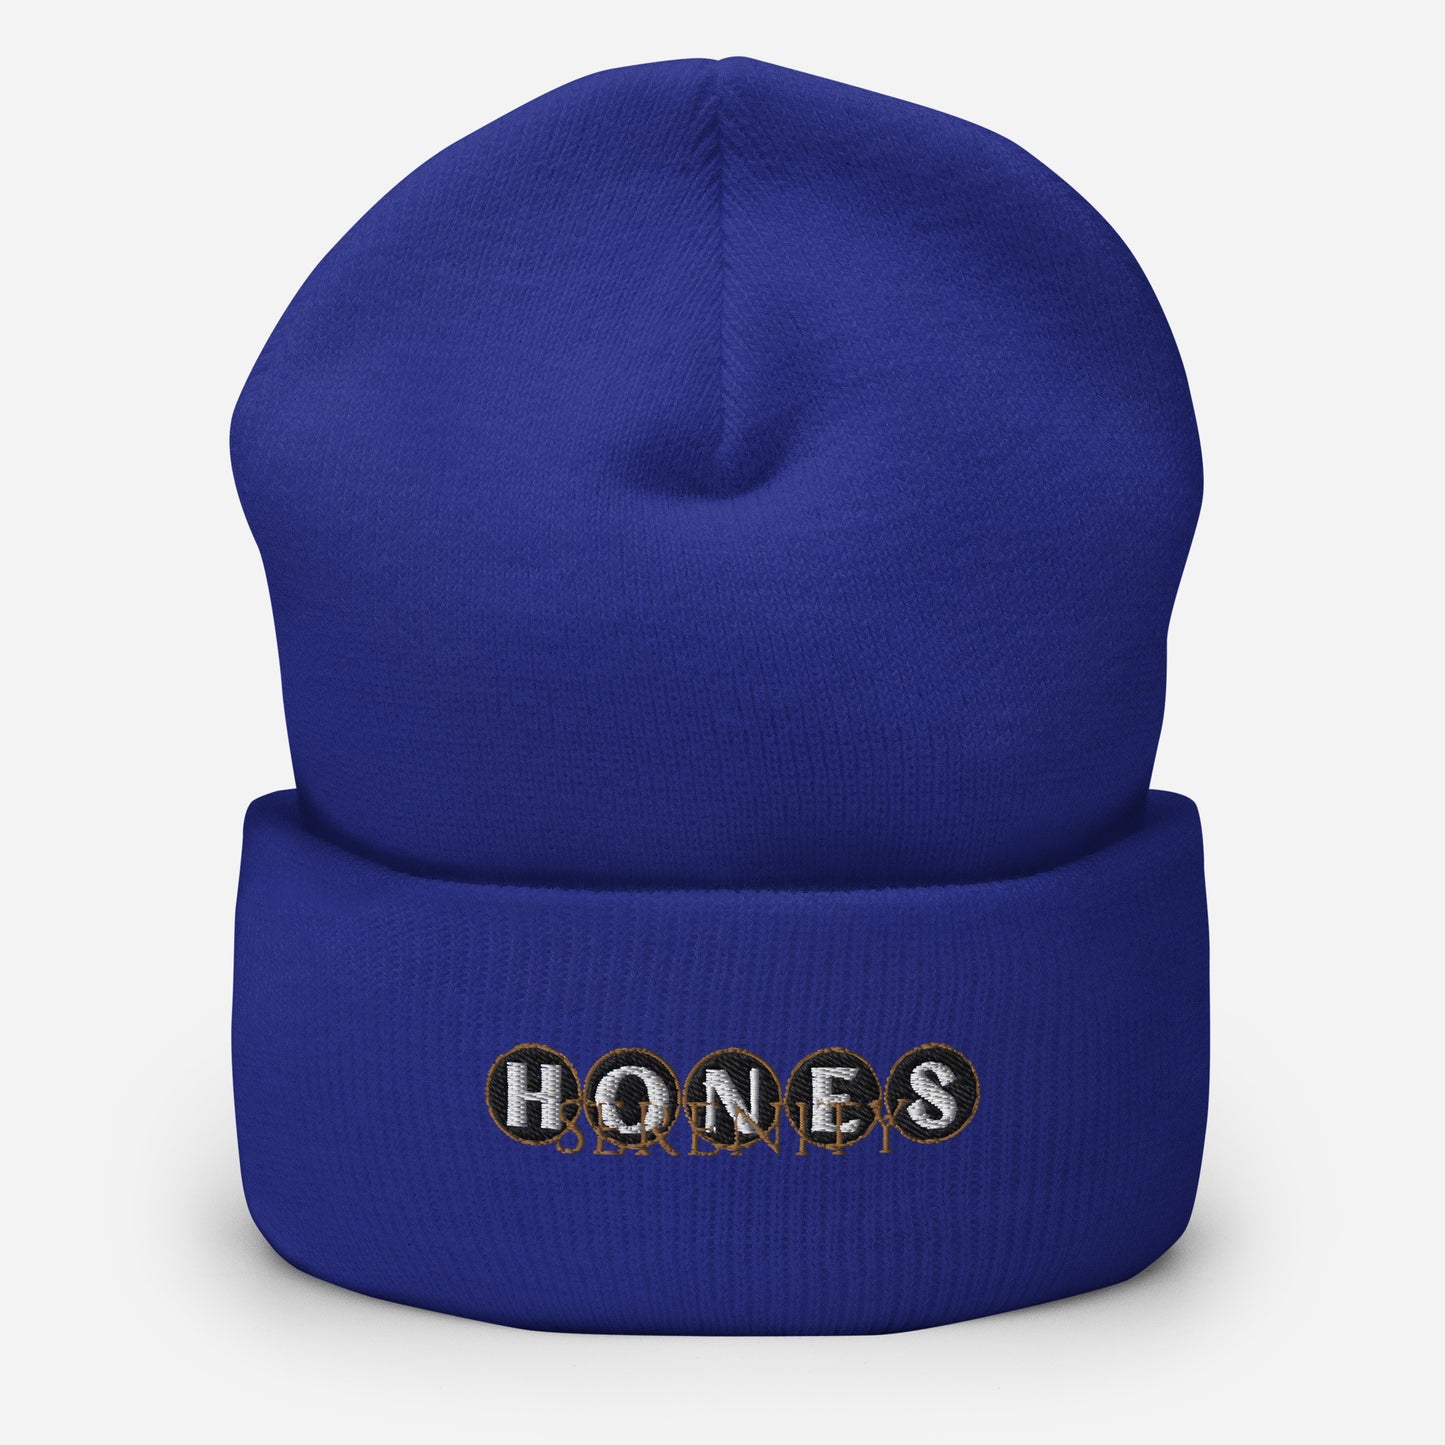 Hones Serenity Unisex Cuffed Hat